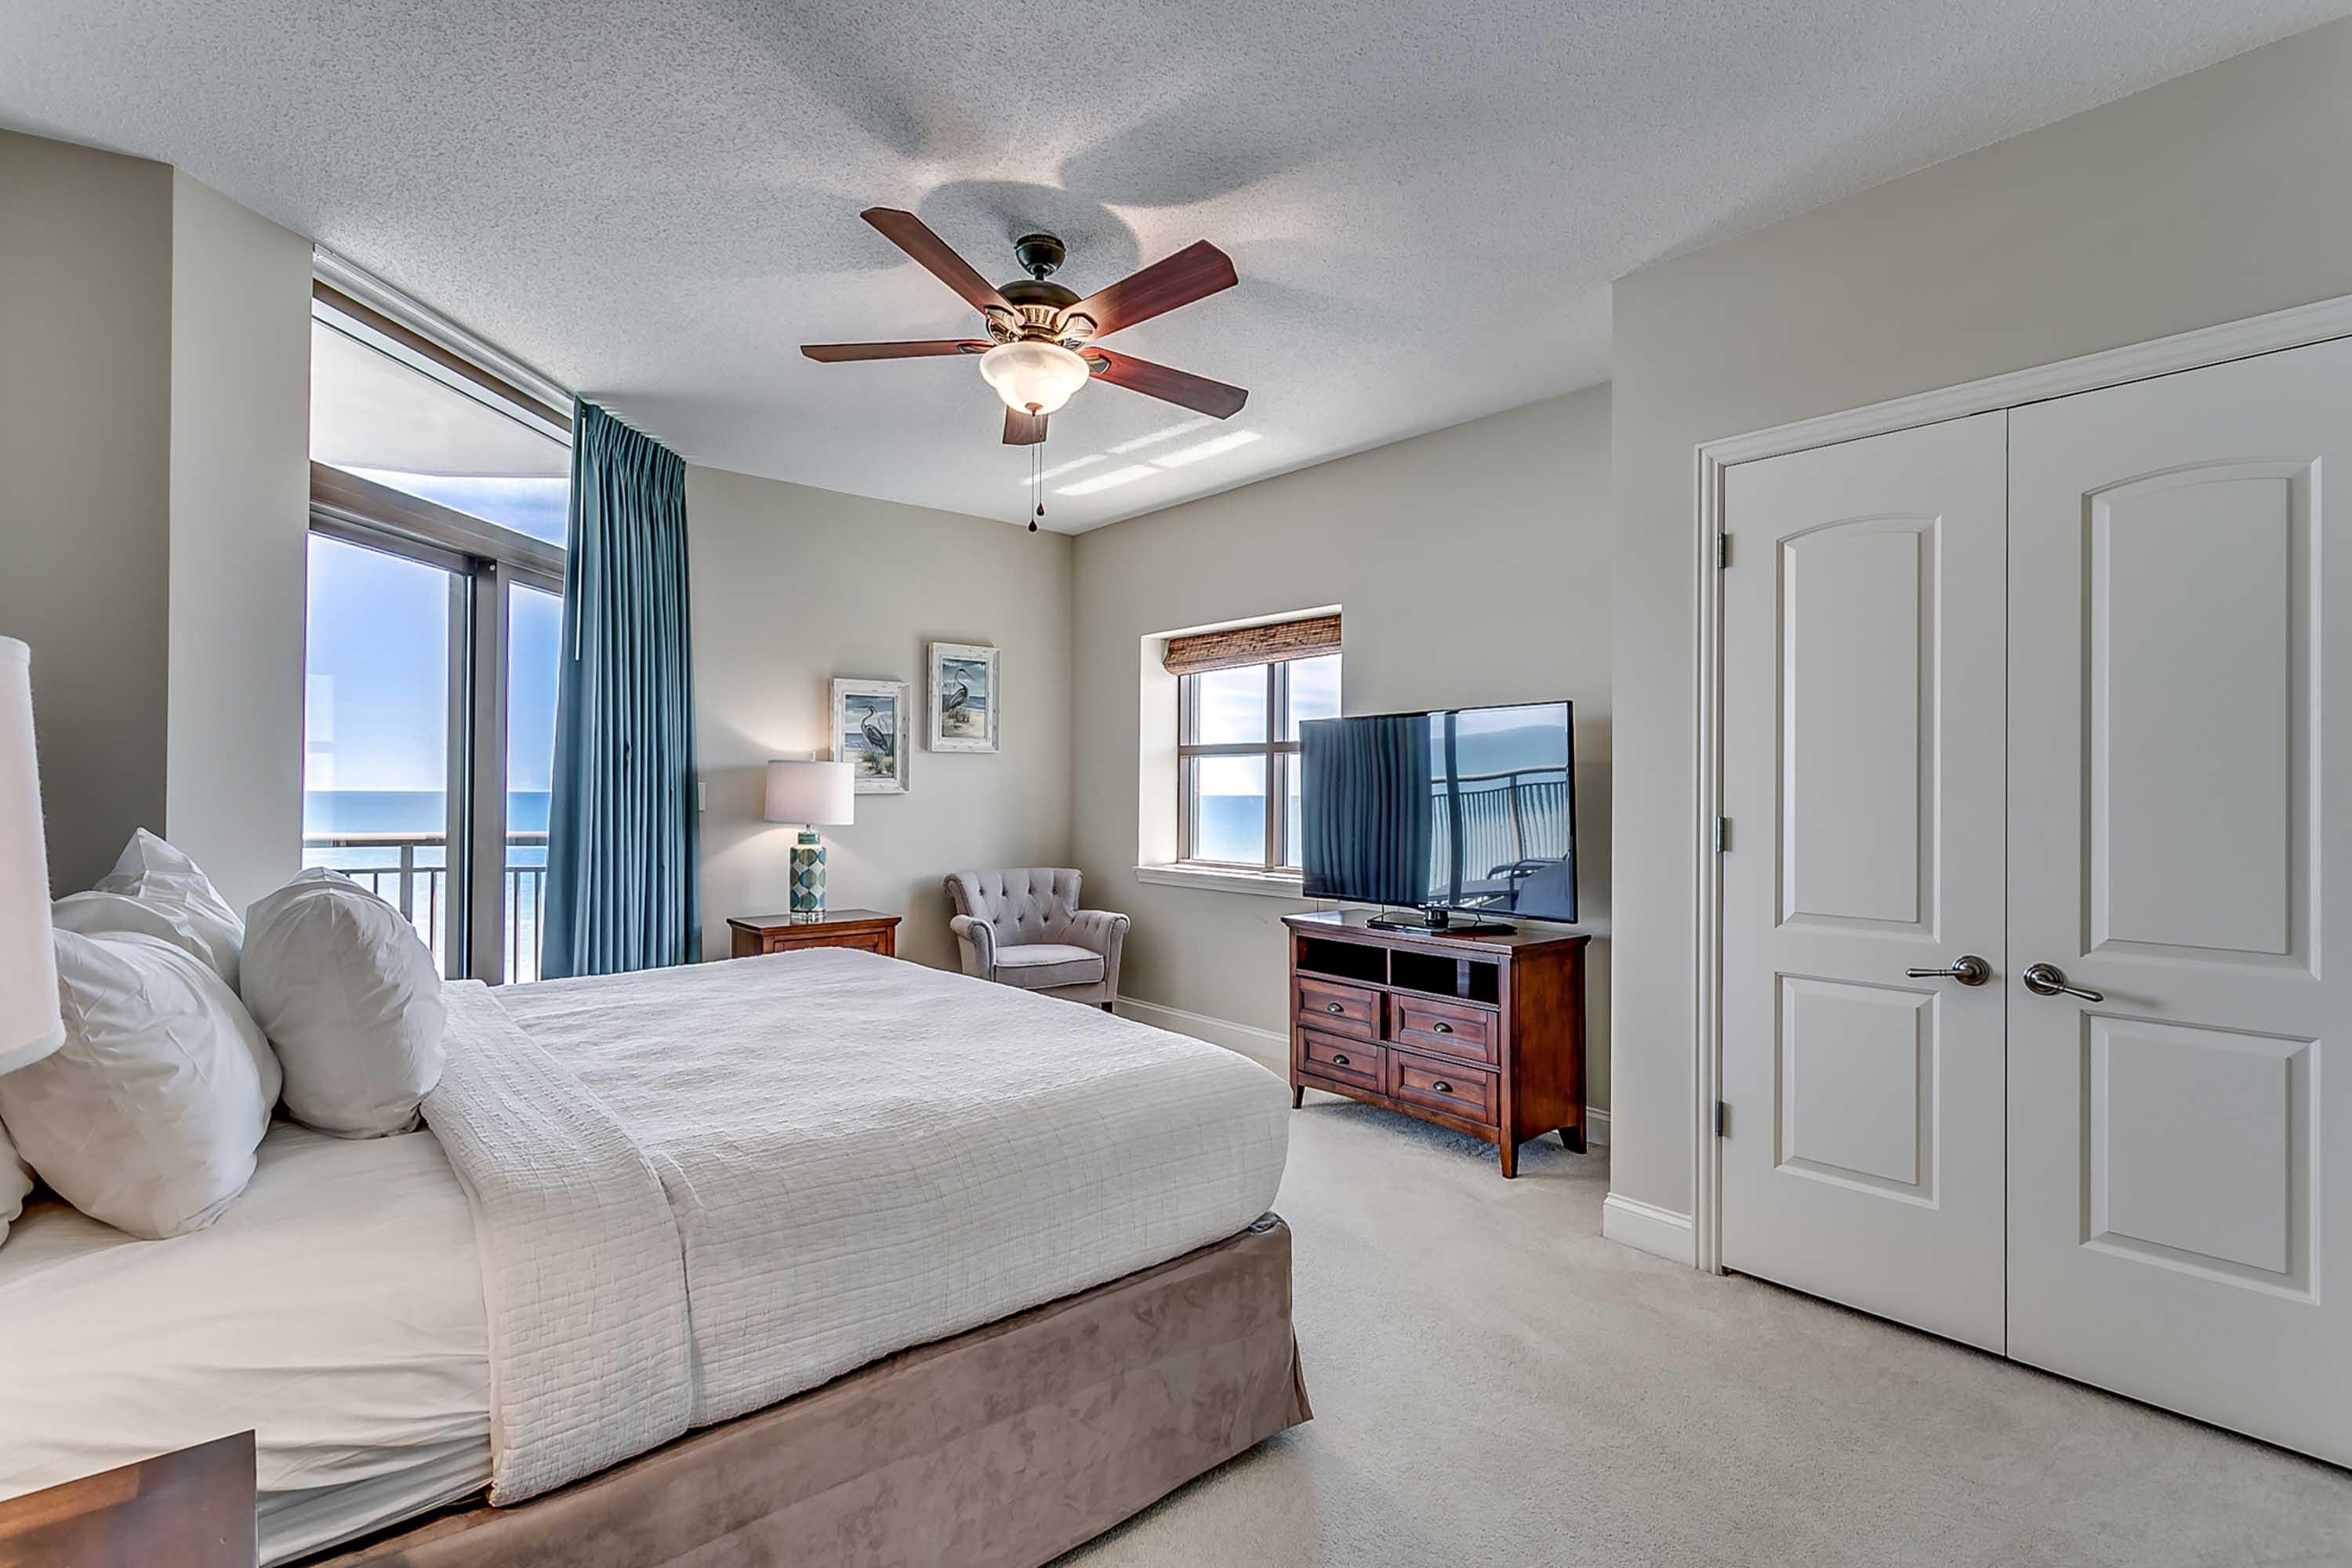 North Beach Resort & Villas - 5 Bedroom Oceanfront Charleston Condo